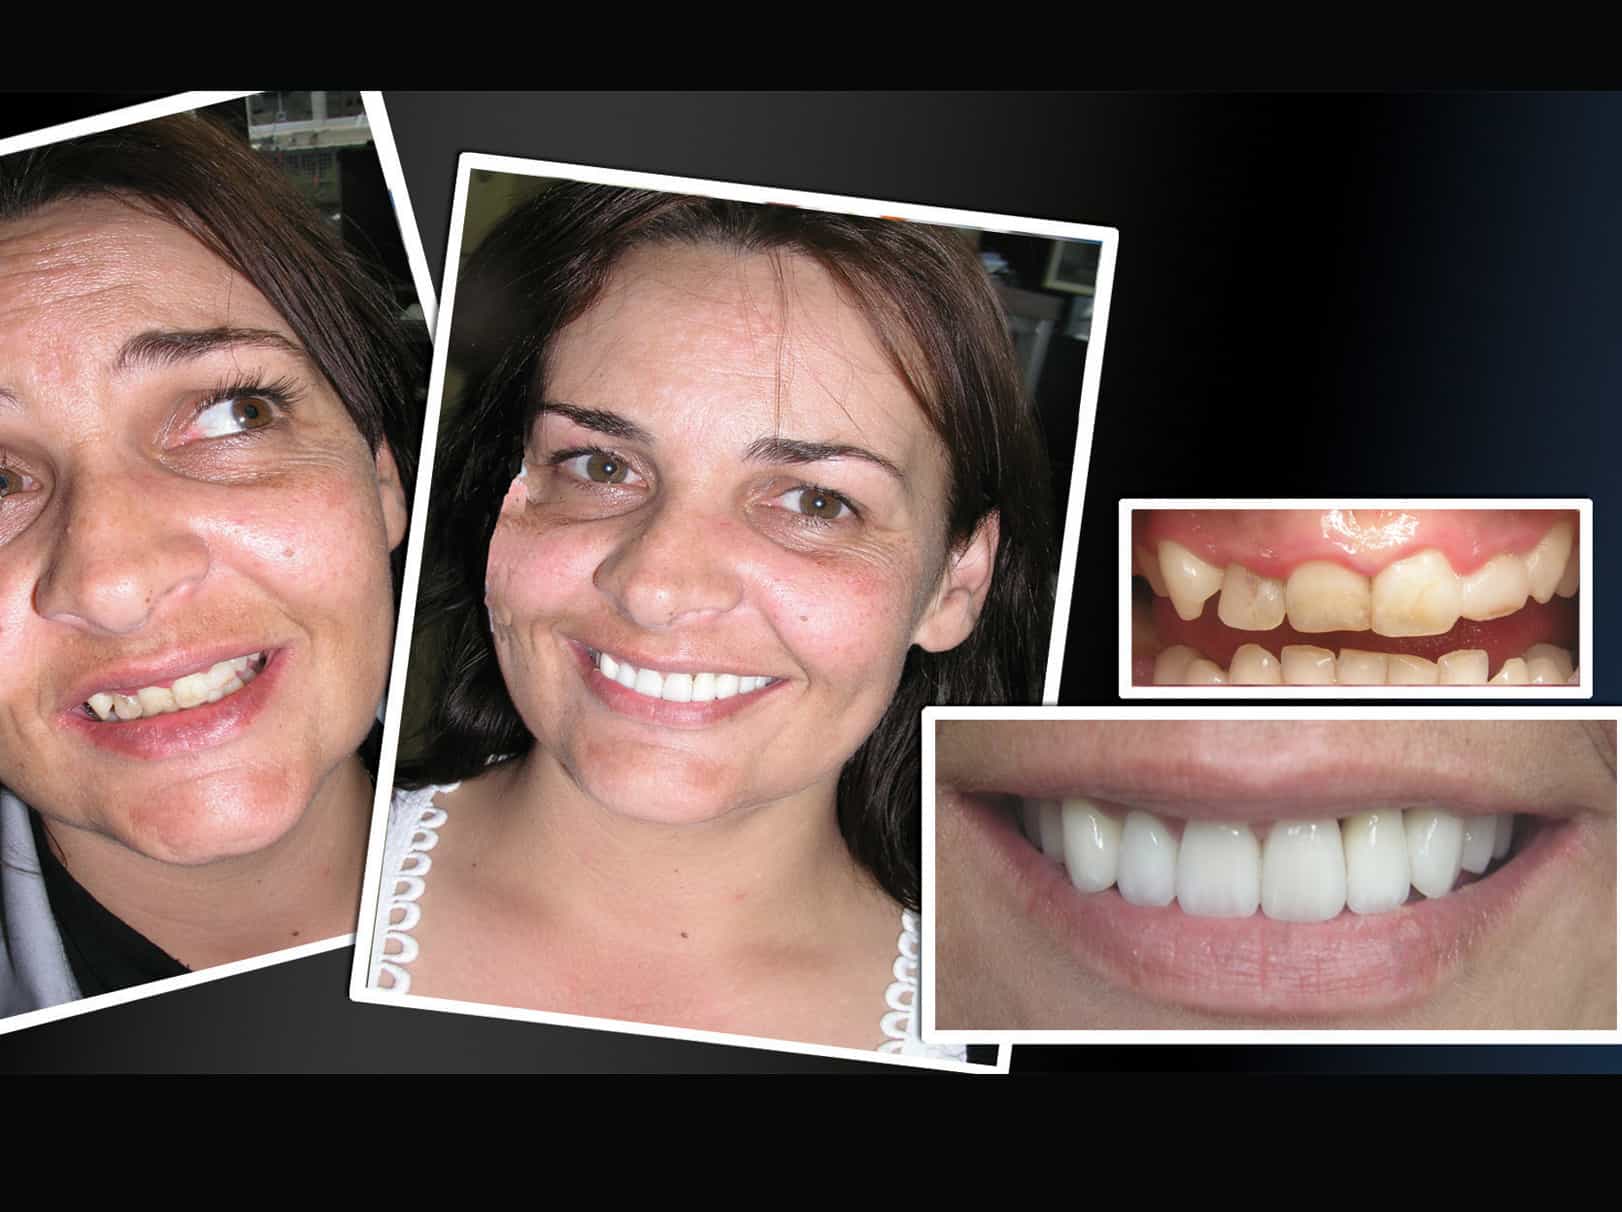 Permanent Teeth Whitening Treatment With Porcelain Veneers- MELBOURNE CBD COSMETIC DENTIST 